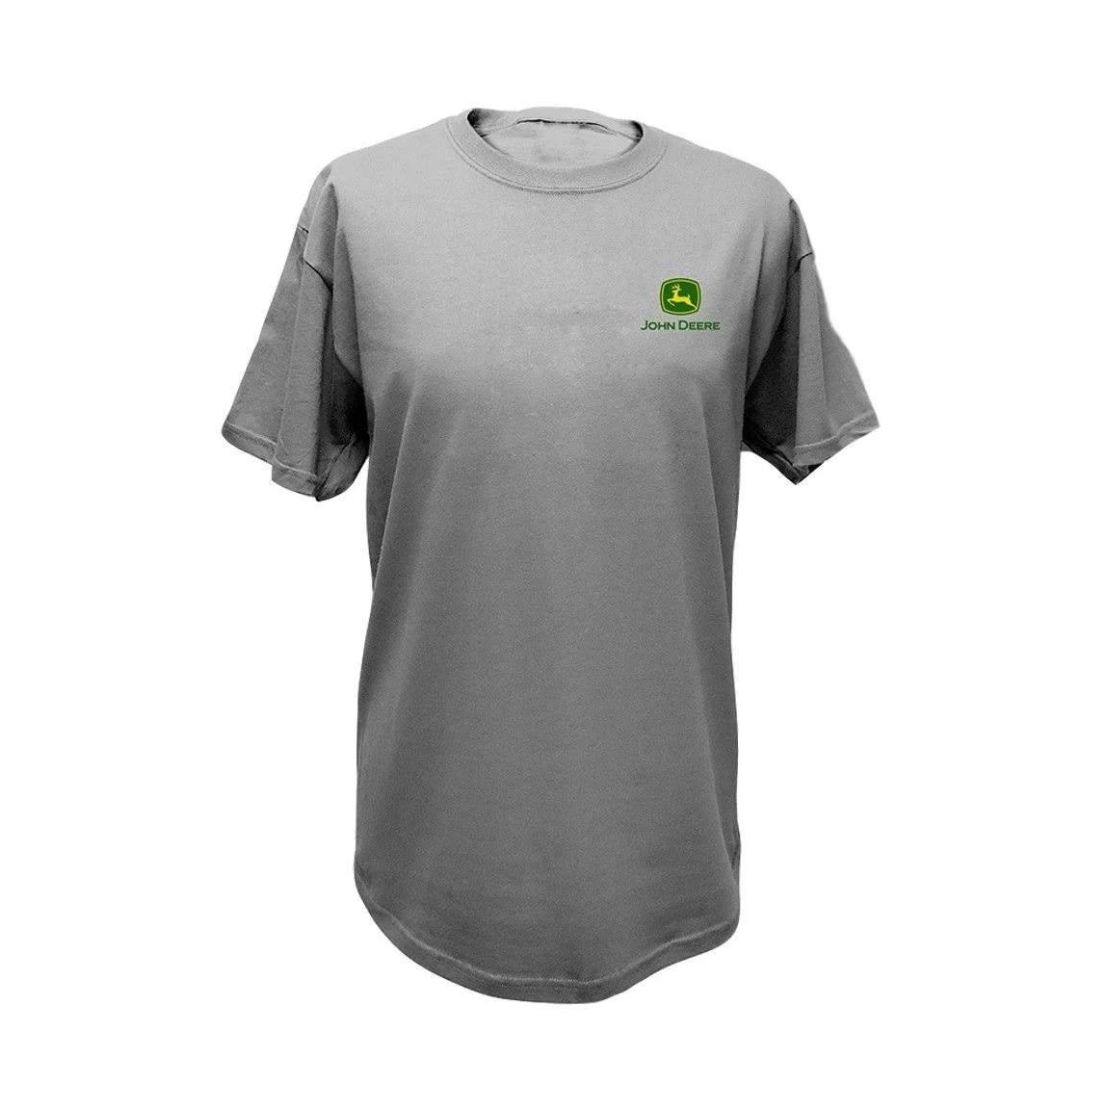 Oxford Grey Logo Tee 3XL Grey Mens Tshirt by John Deere | The Bloke Shop